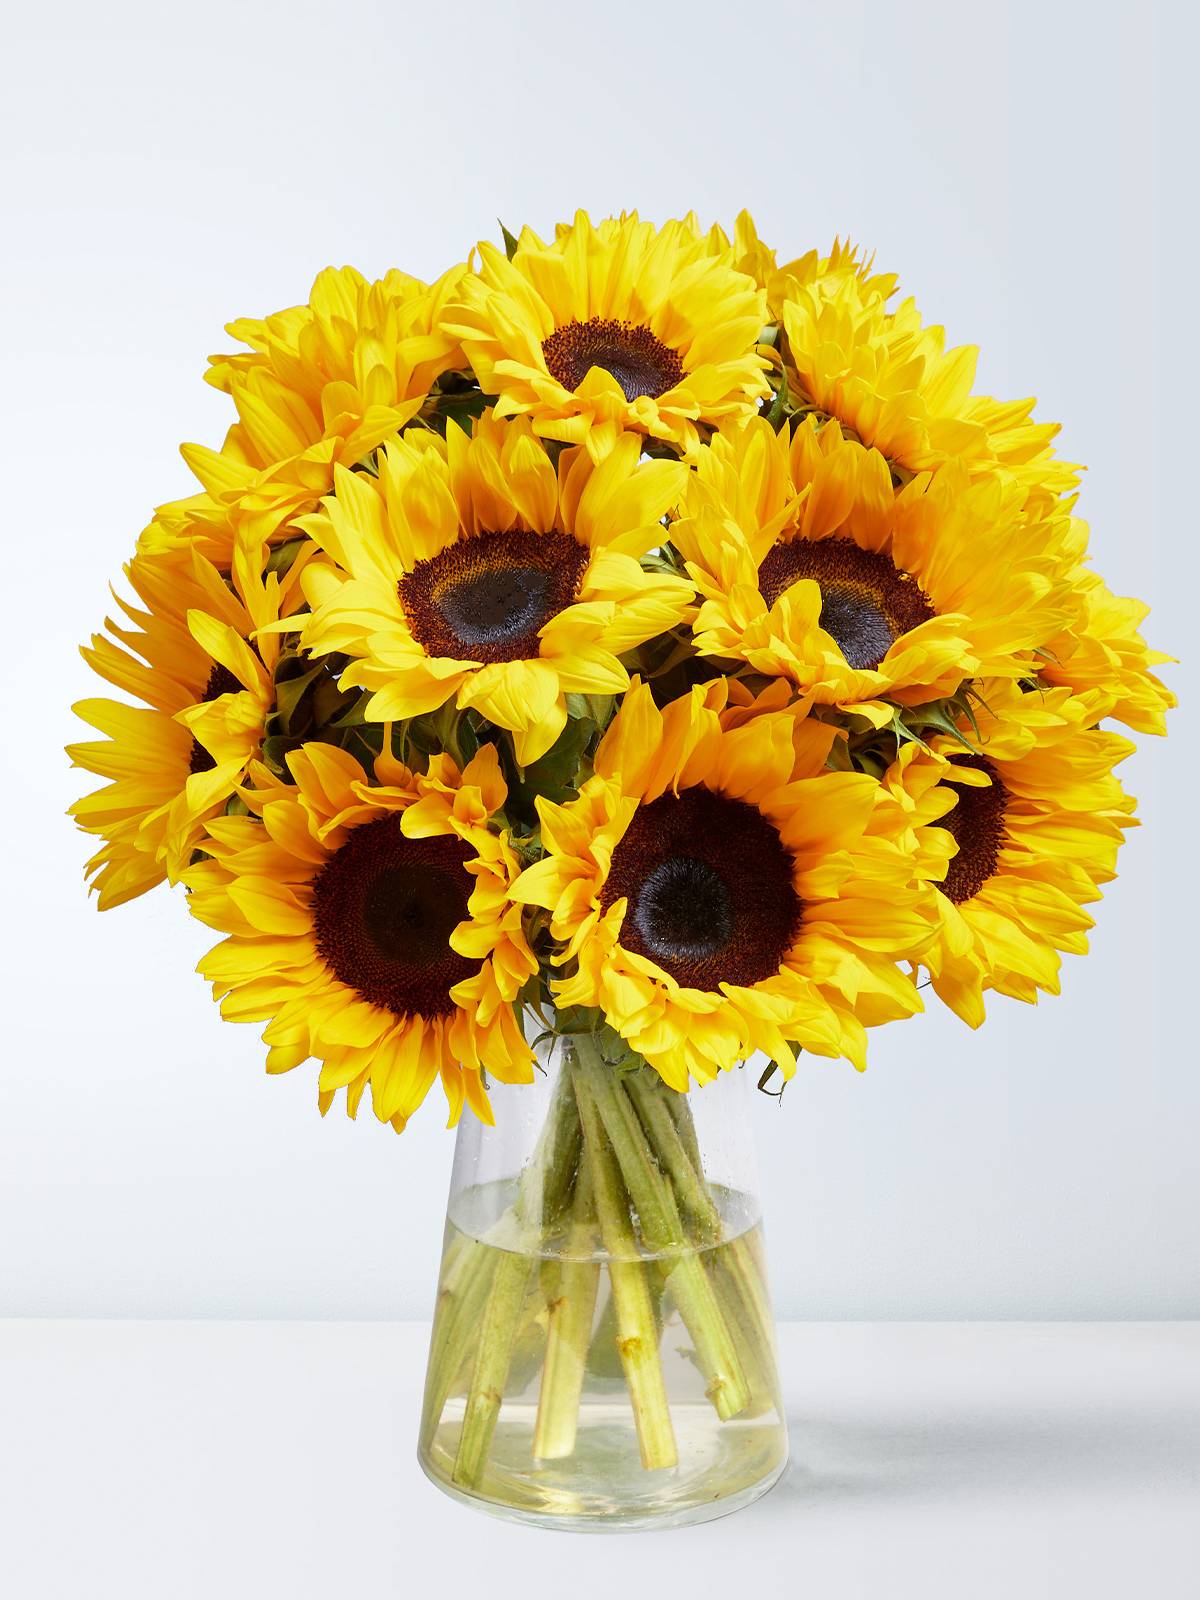 Sunflower colors